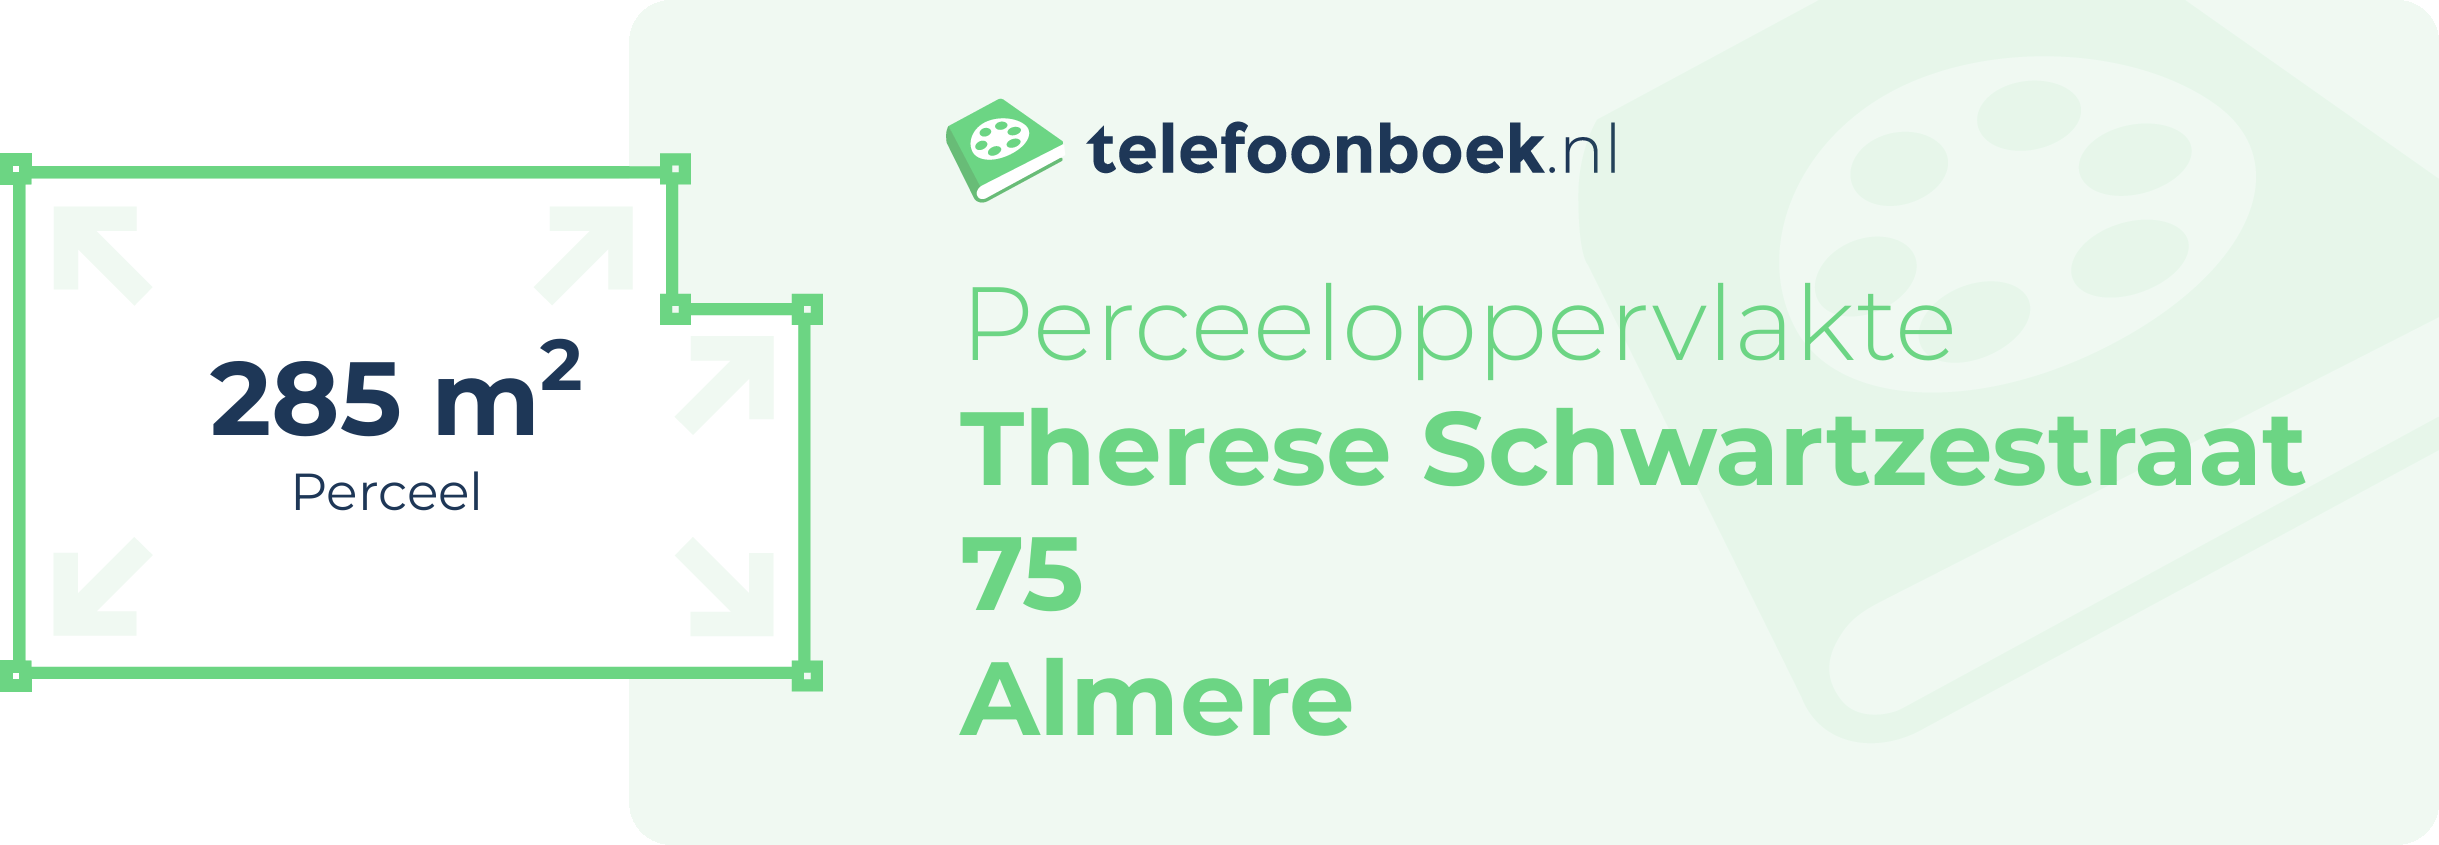 Perceeloppervlakte Therese Schwartzestraat 75 Almere